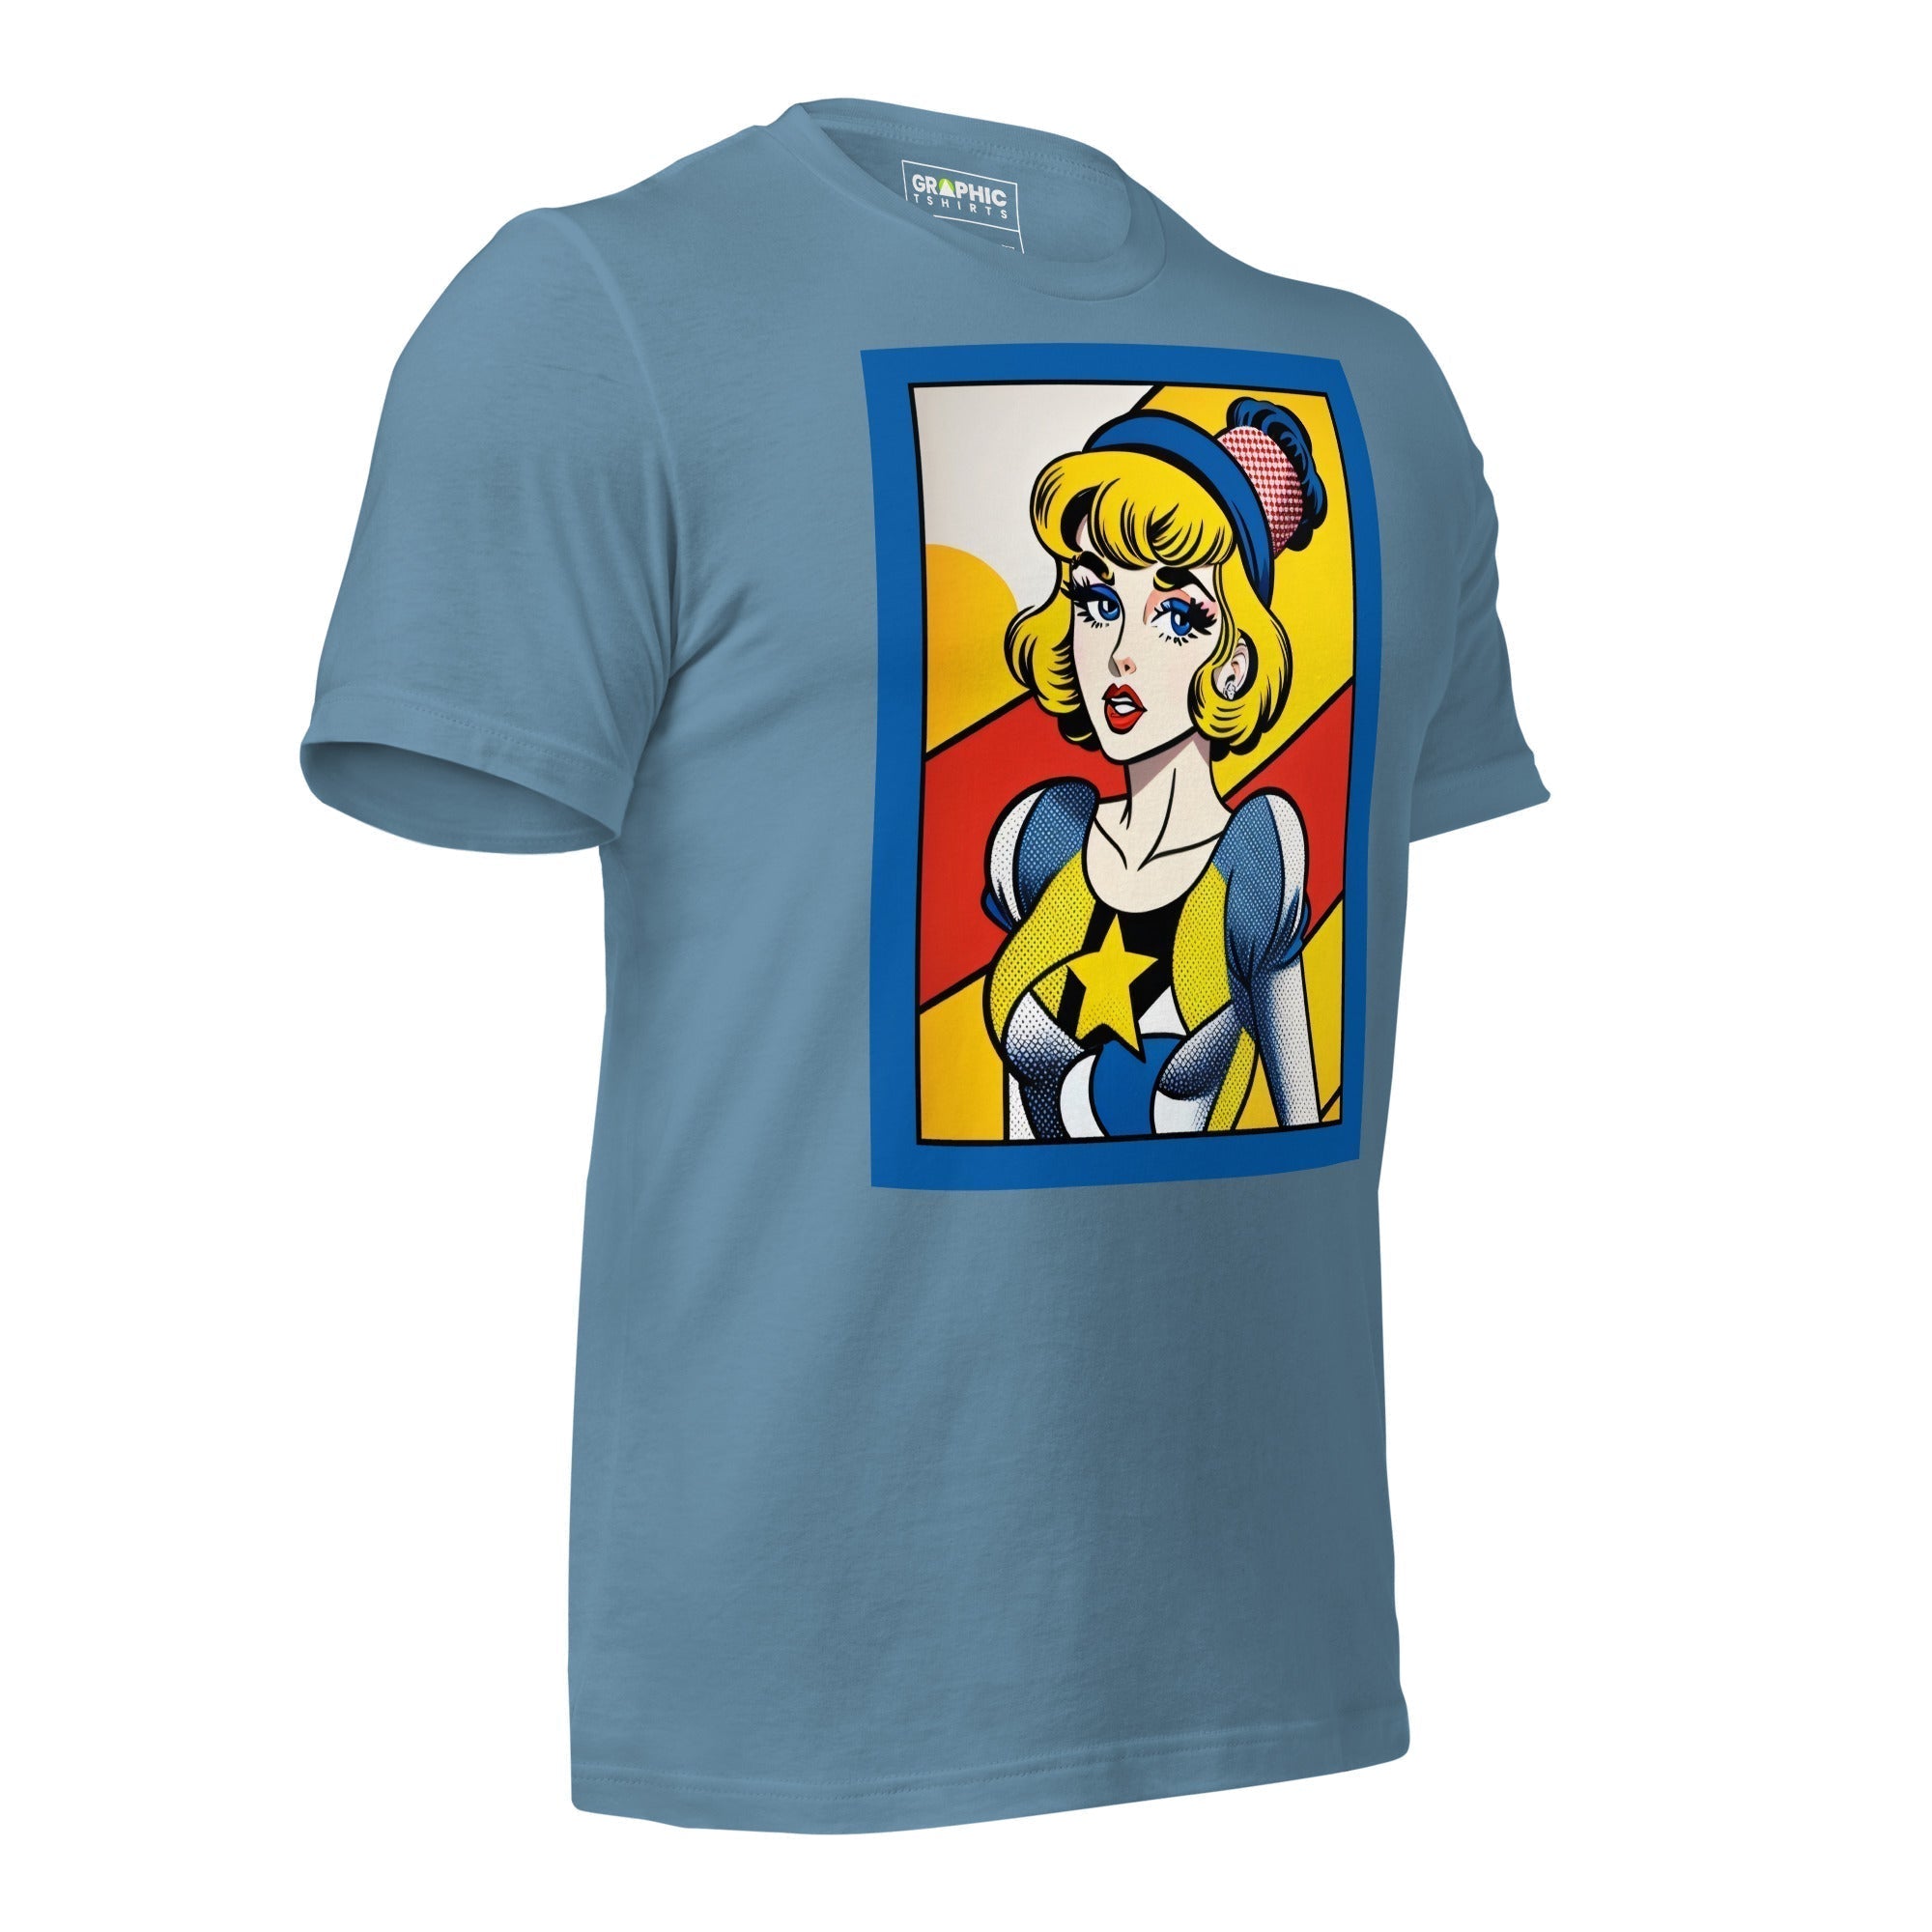 Unisex Crew Neck T-Shirt - Vintage American Comic Series v.33 - GRAPHIC T-SHIRTS